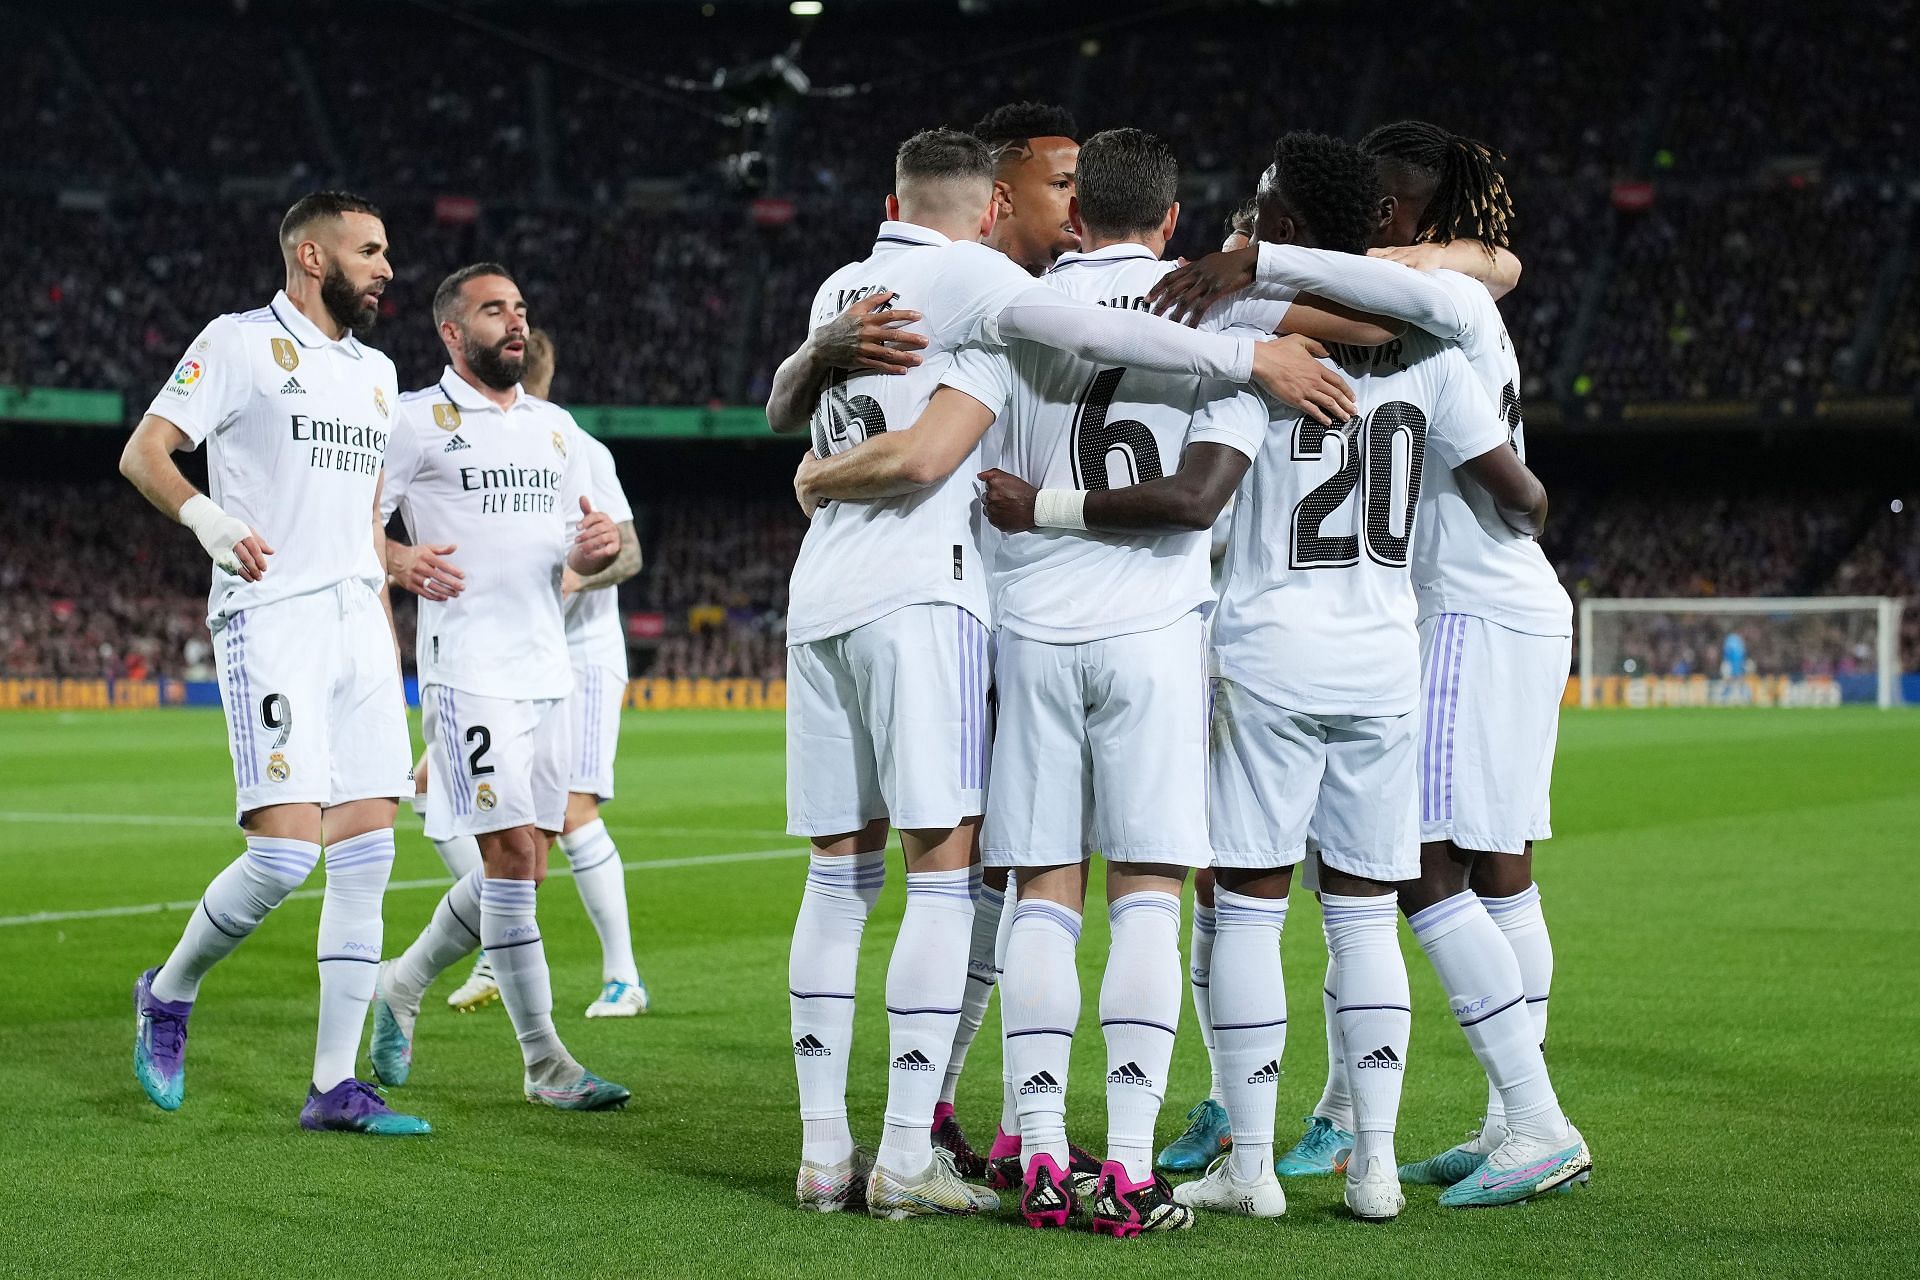 Madrid players celebrate a goal.